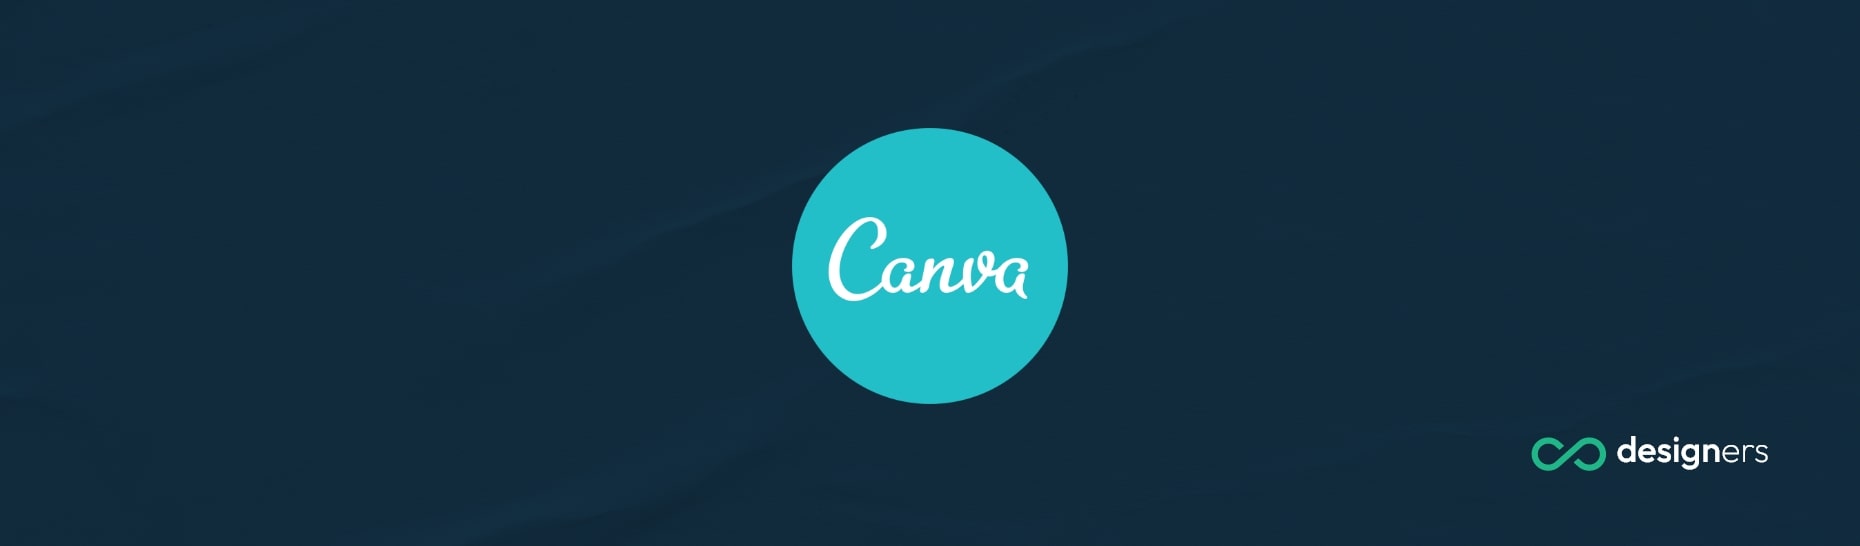 What Are Canva Design Ideas?